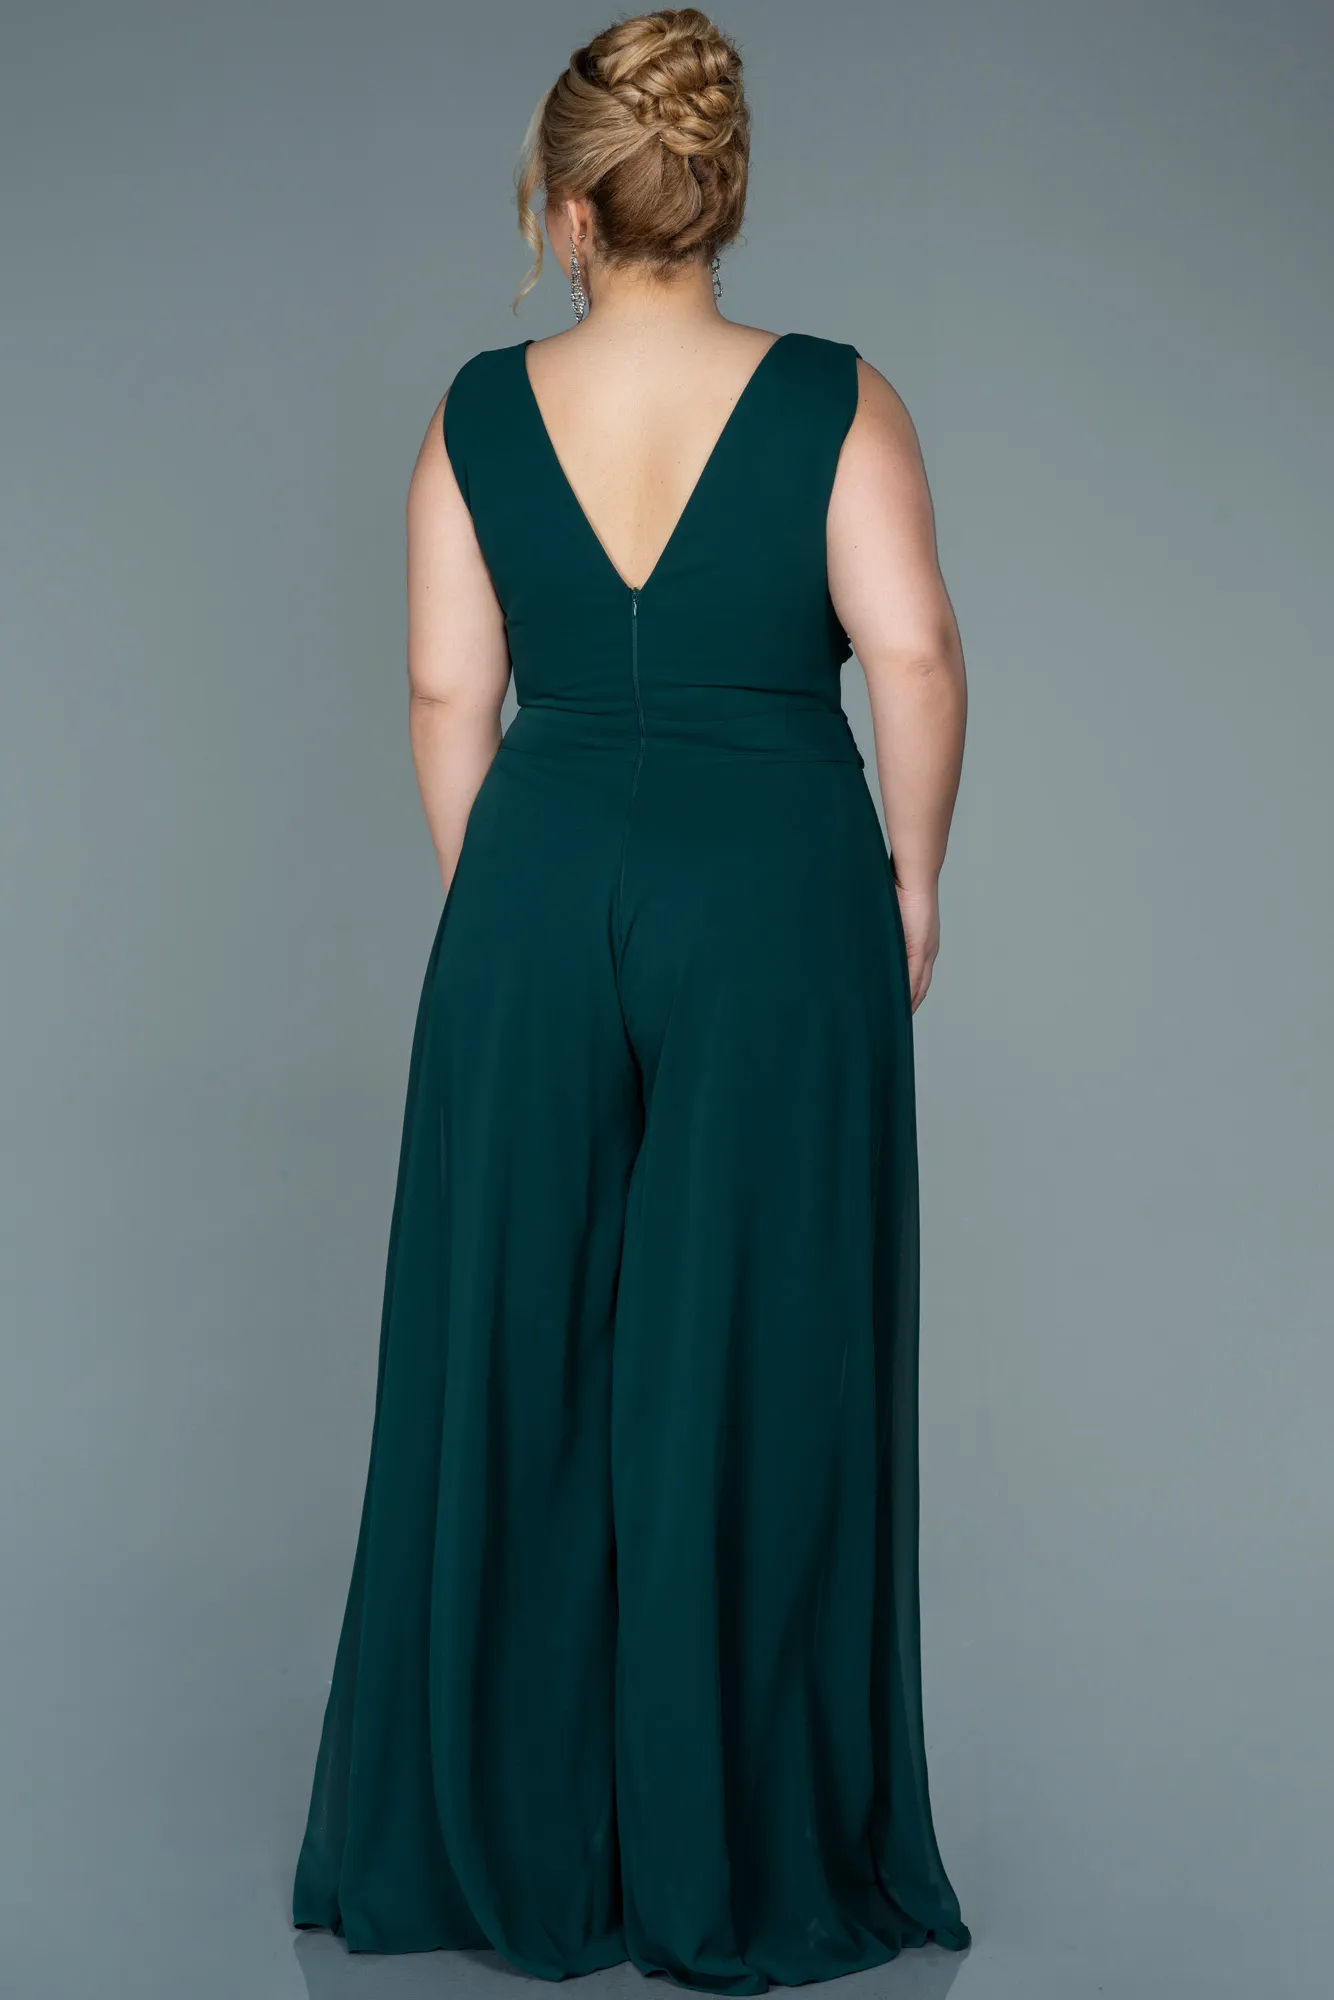 Emerald Green-Chiffon Plus Size Evening Dress ABT082